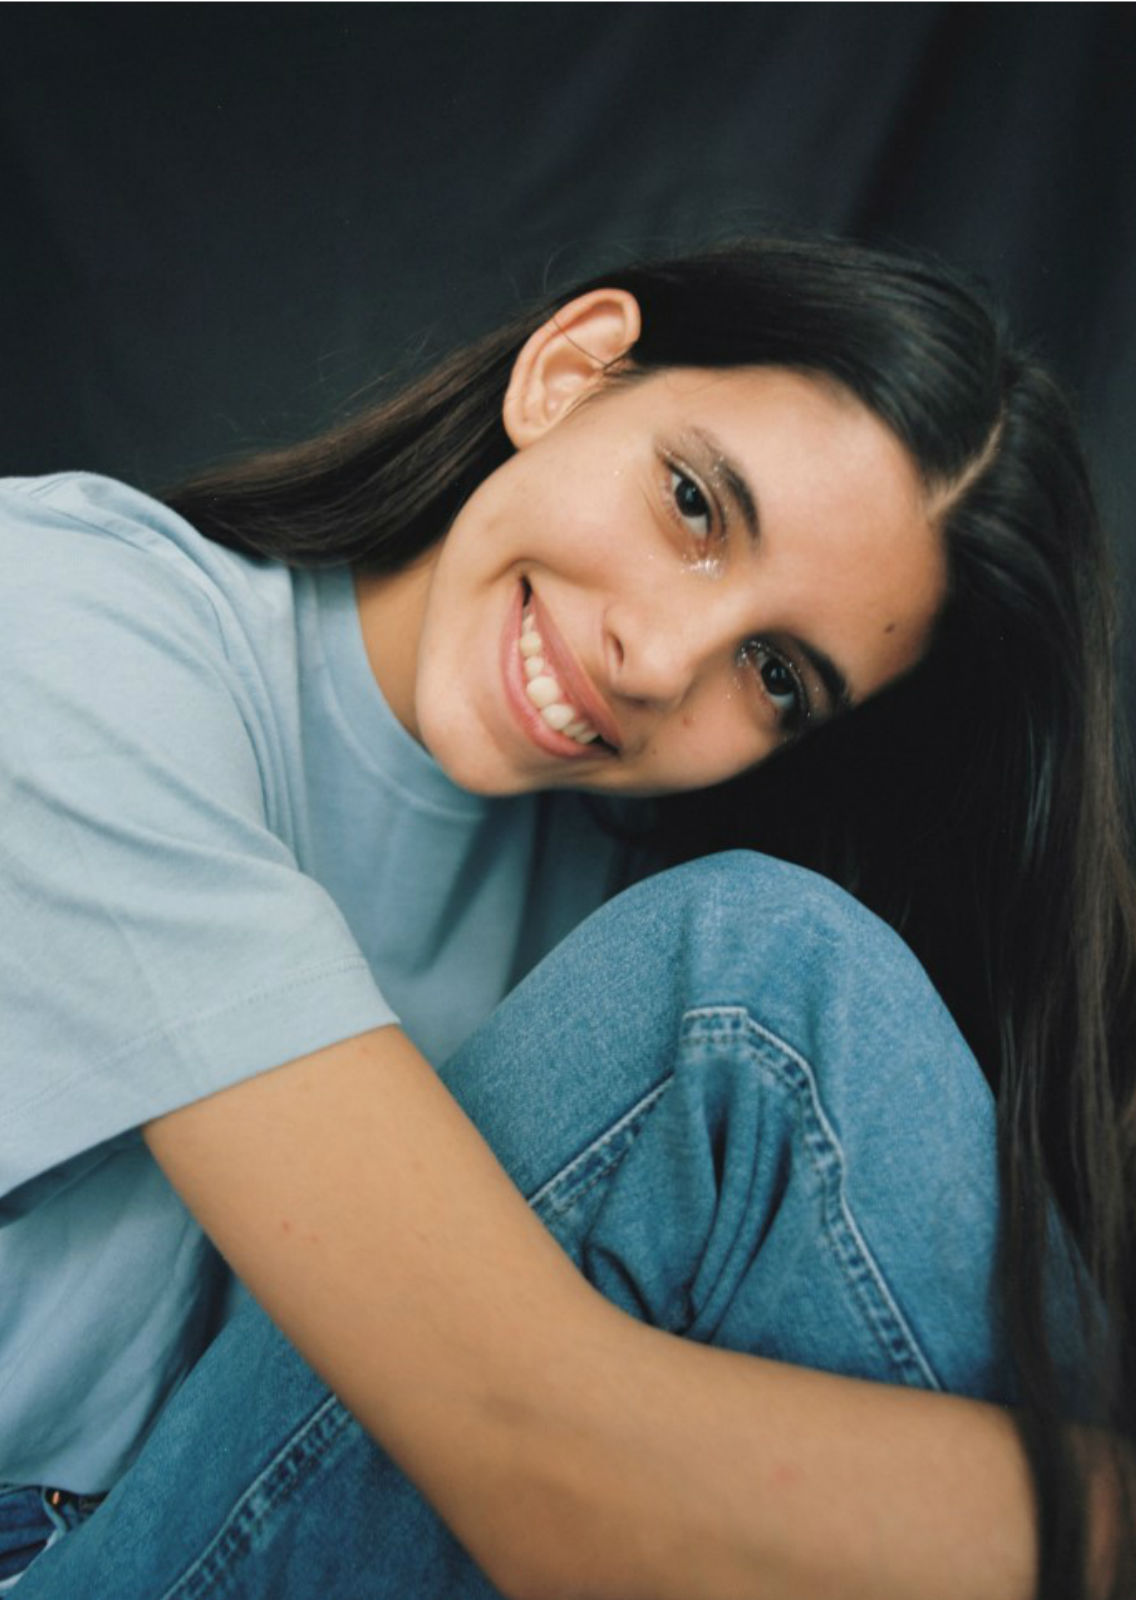 ELSIE VENTURA. Carmen Duran Model Agency.